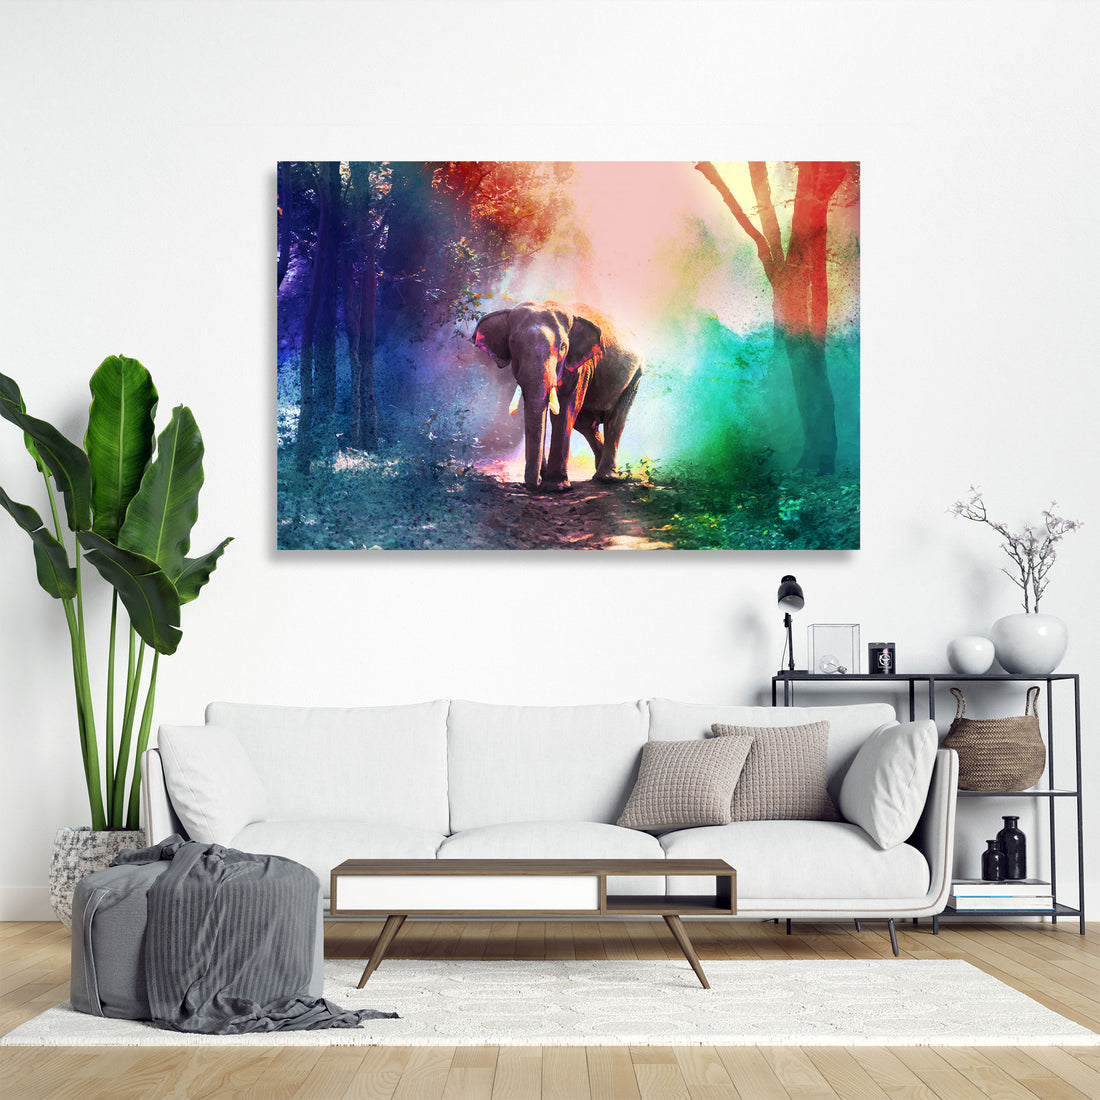 Wandbild abstrakt Elefant im Wald